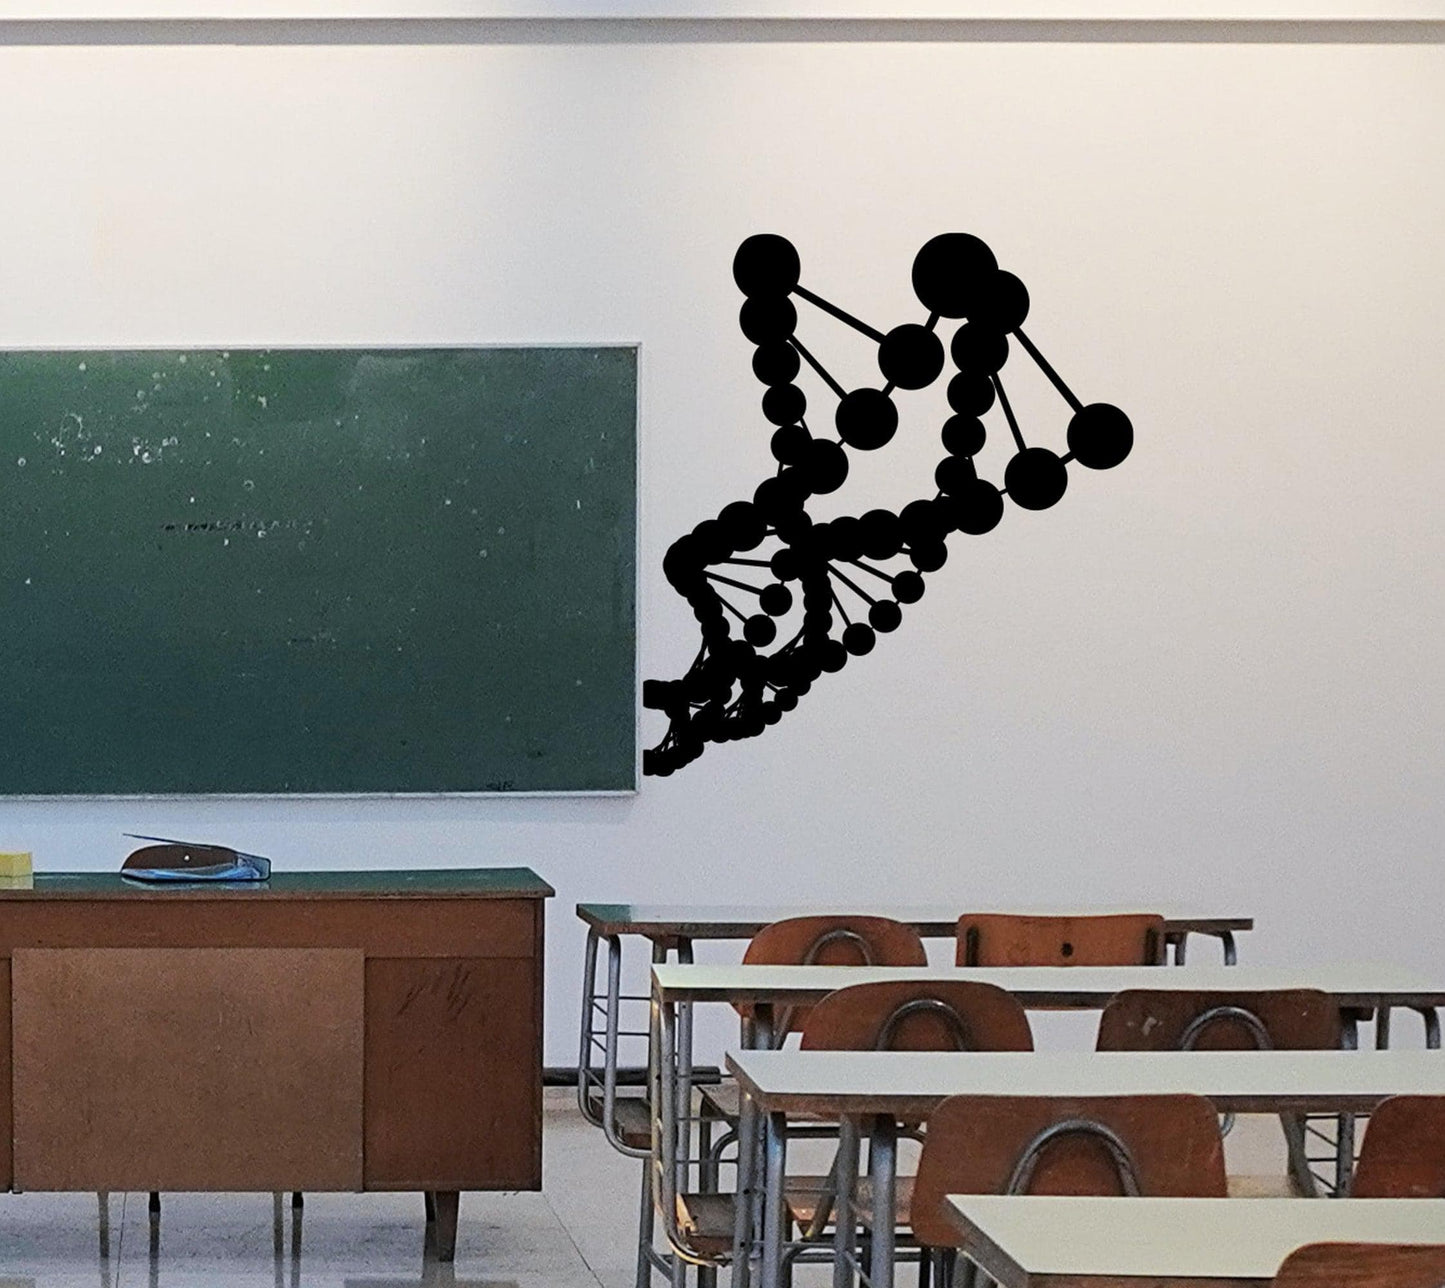 DNA Helix Vinyl Wall Decal Sticker. Science Decor. Classroom wall decoration. #1216